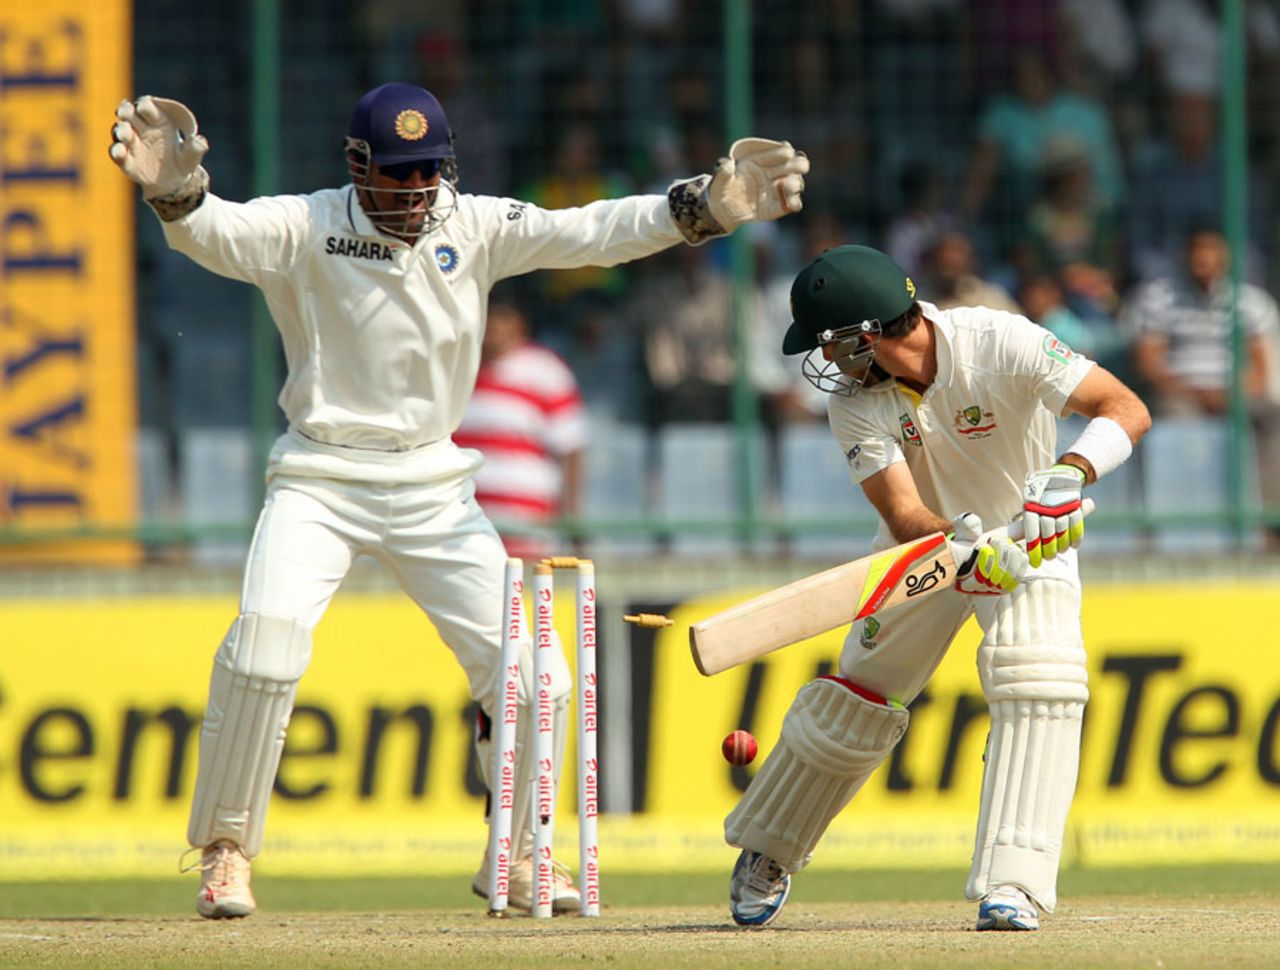 Glenn Maxwell was bowled by Ravindra Jadeja for eight runs, India v Australia, 4th Test, 3rd day, March 24, 2013